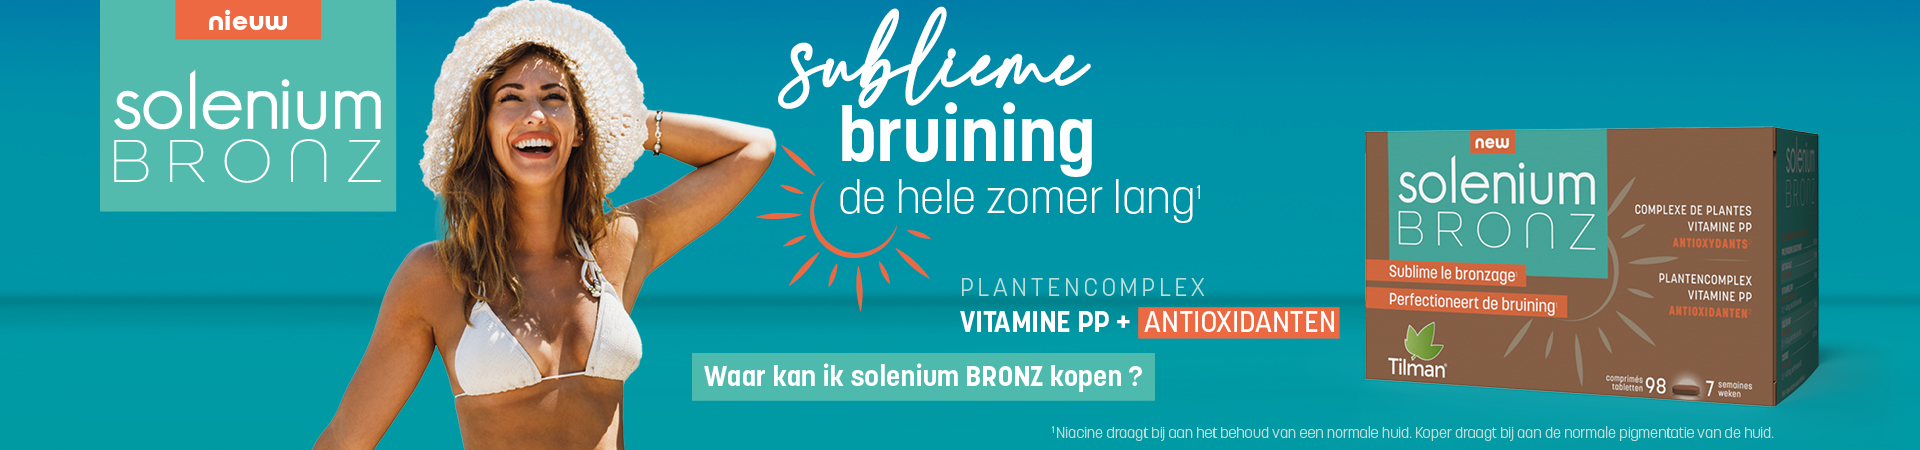 solenium-bronz_be_landing-page_banner-12